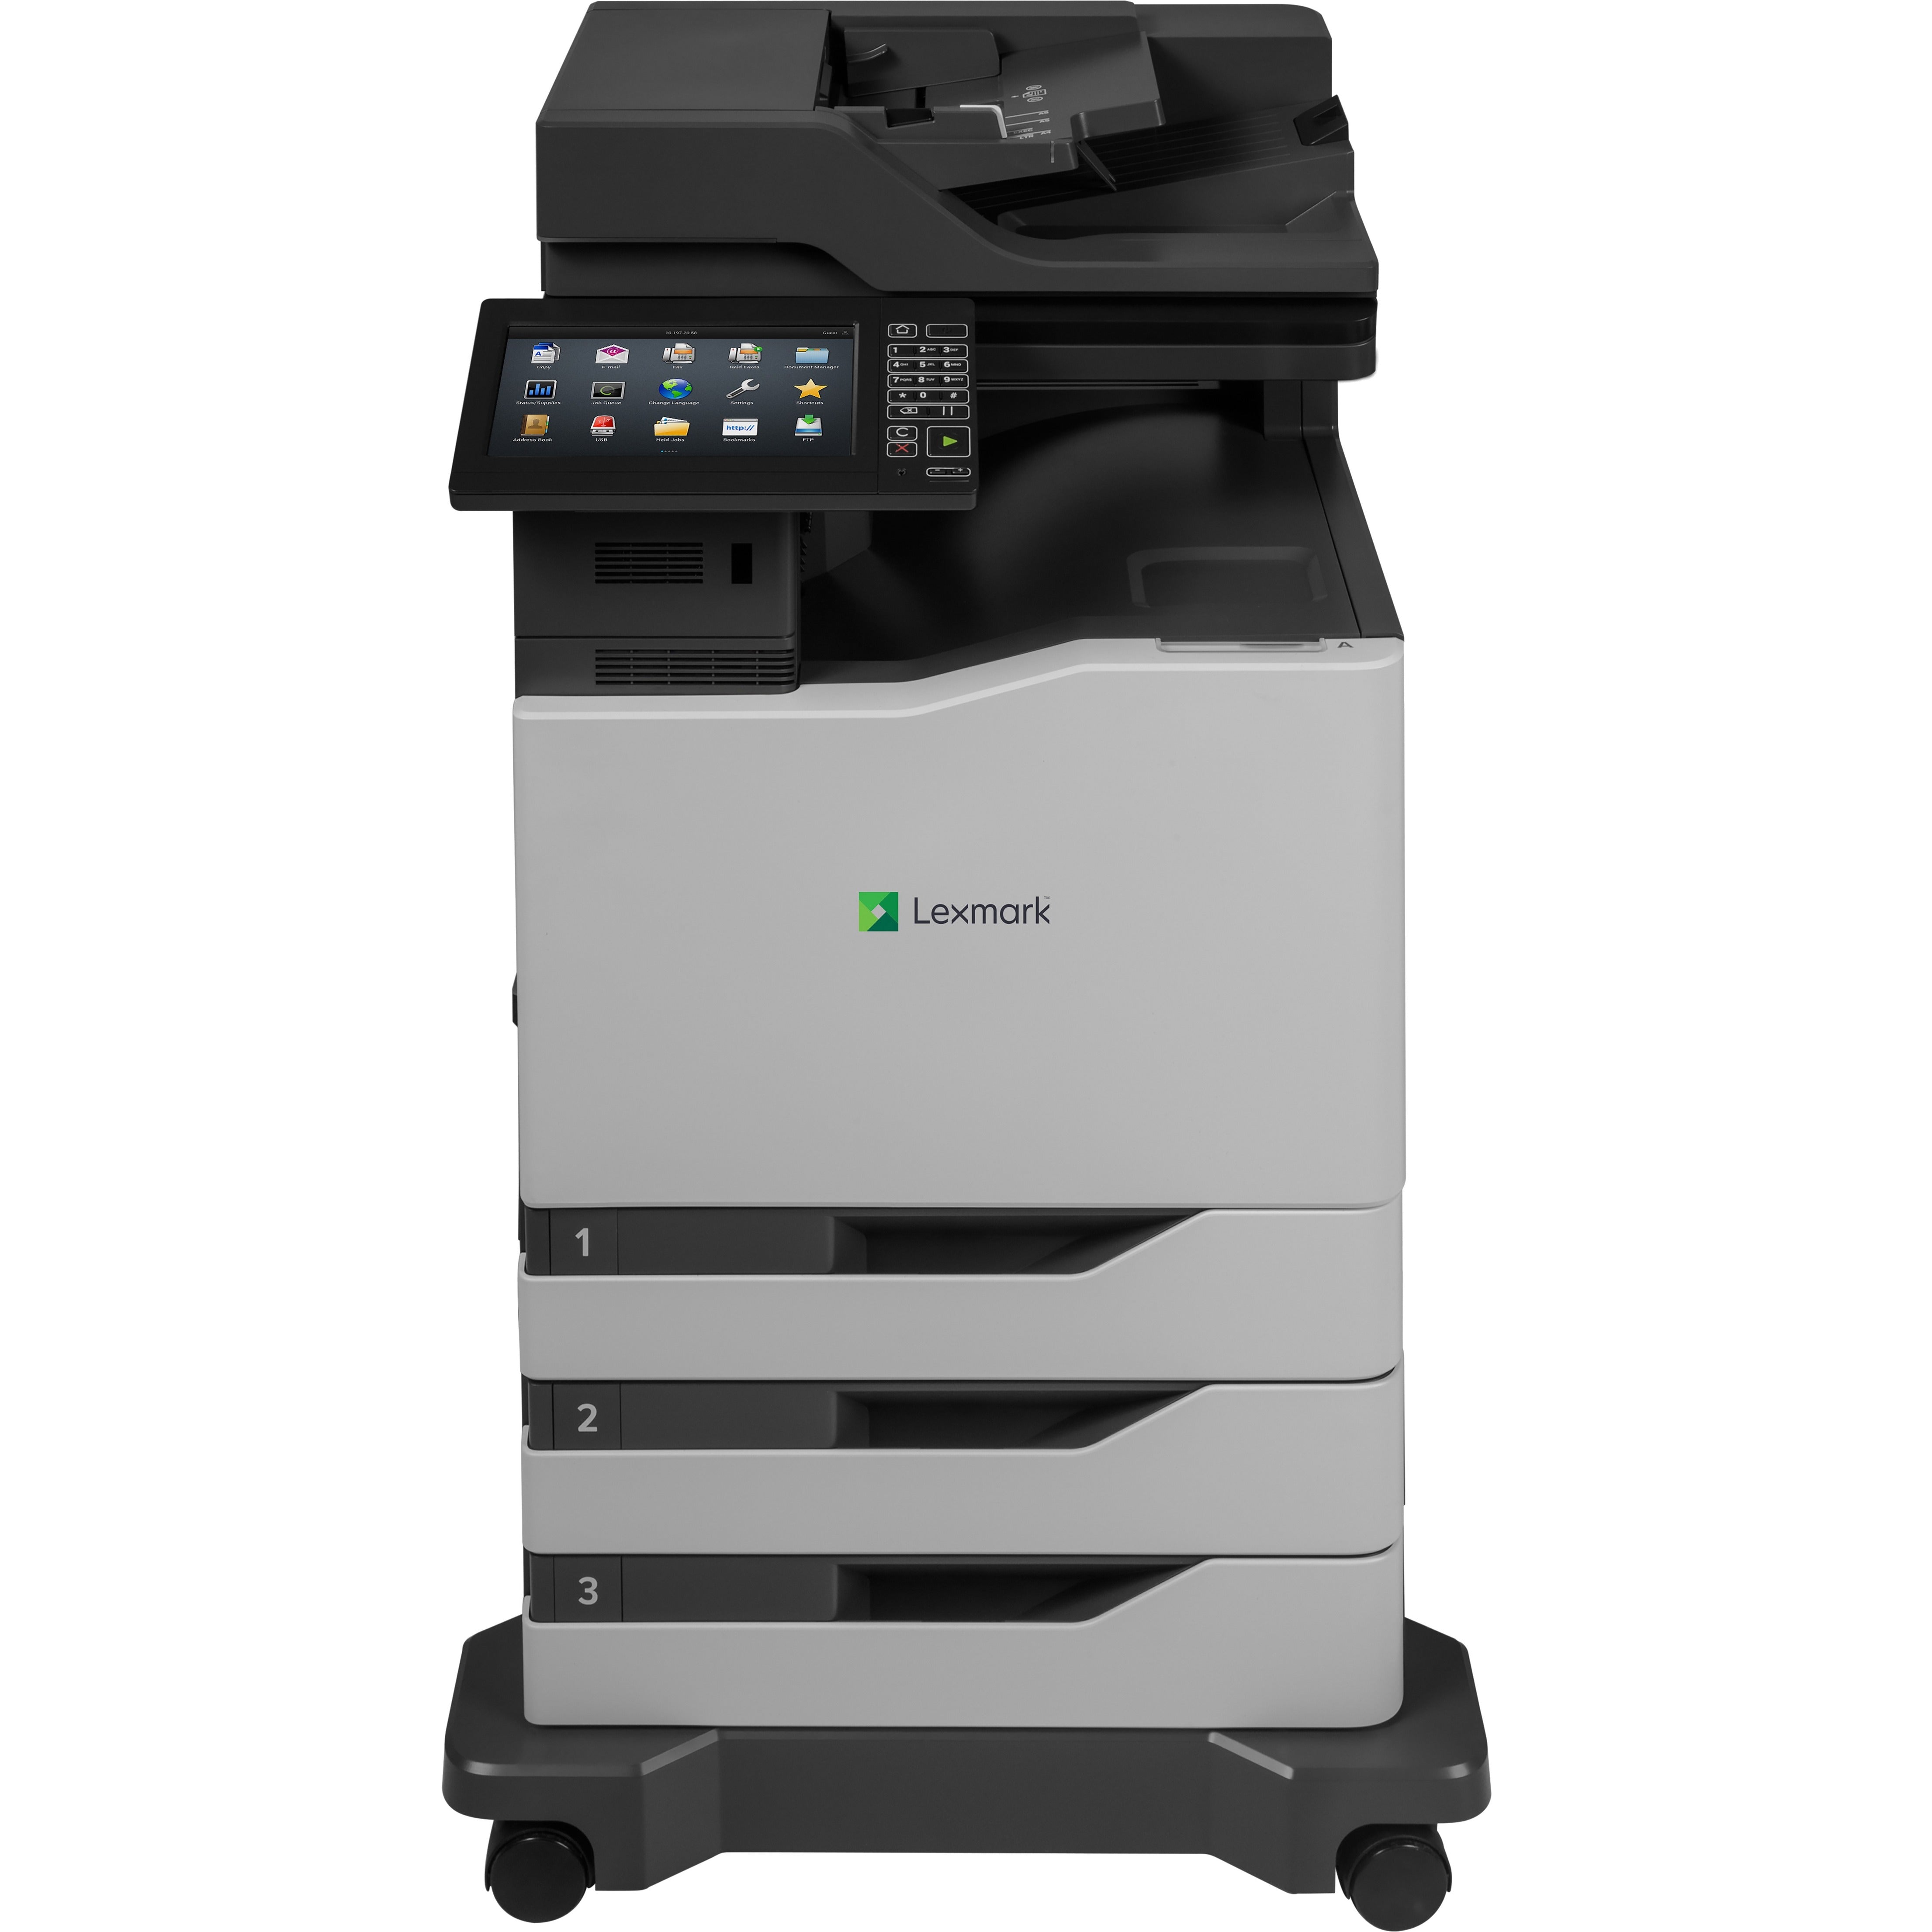 Lexmark 42KT141 CX825dte Laser Multifunction Printer - Color, Automatic Duplex Printing, 55 ppm, 2400 x 600 dpi